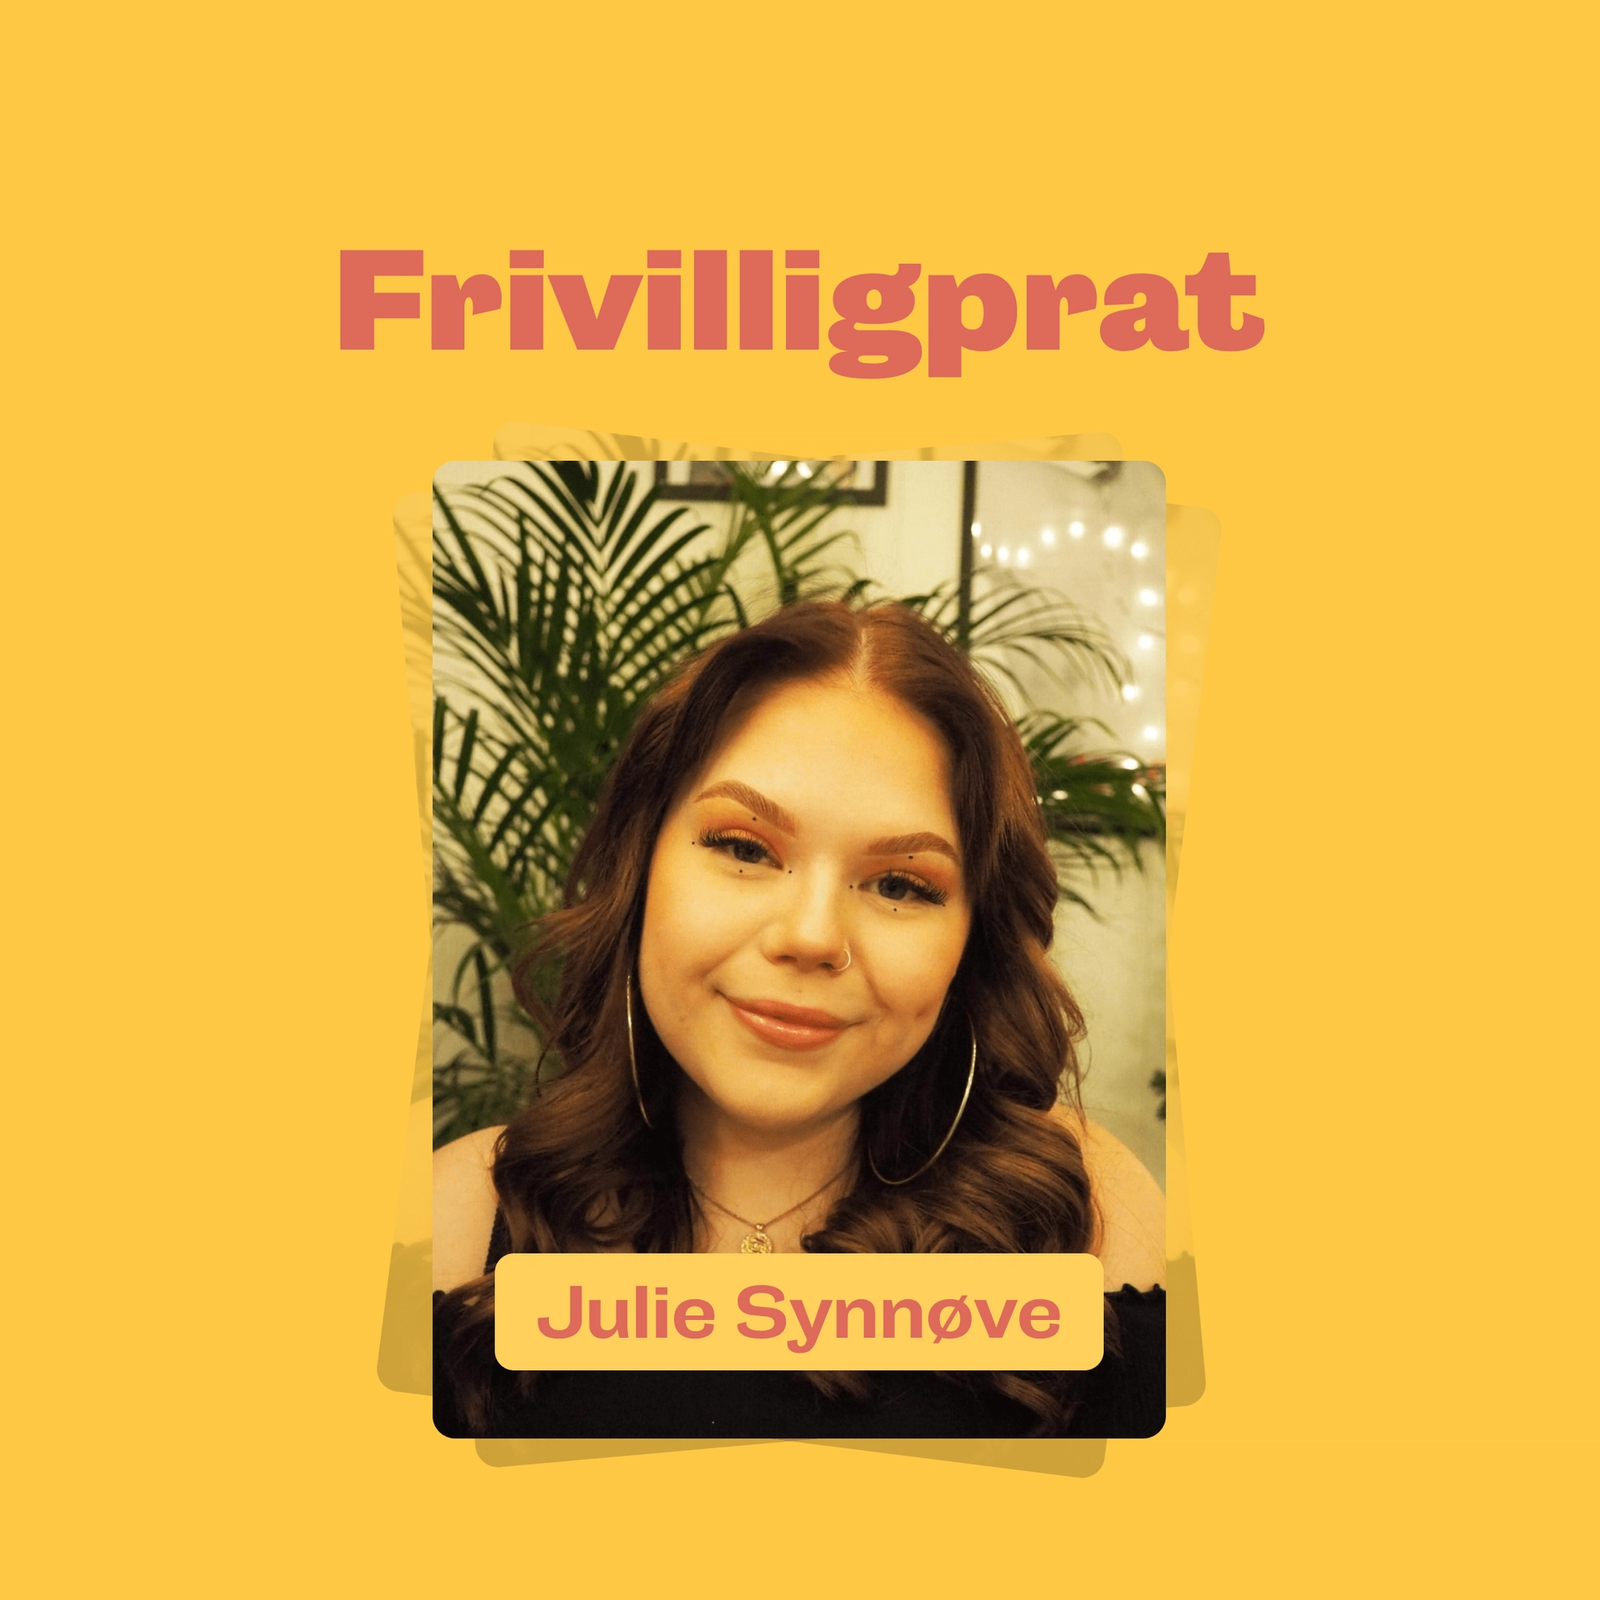 Frivilligprat med Julie Synnøve